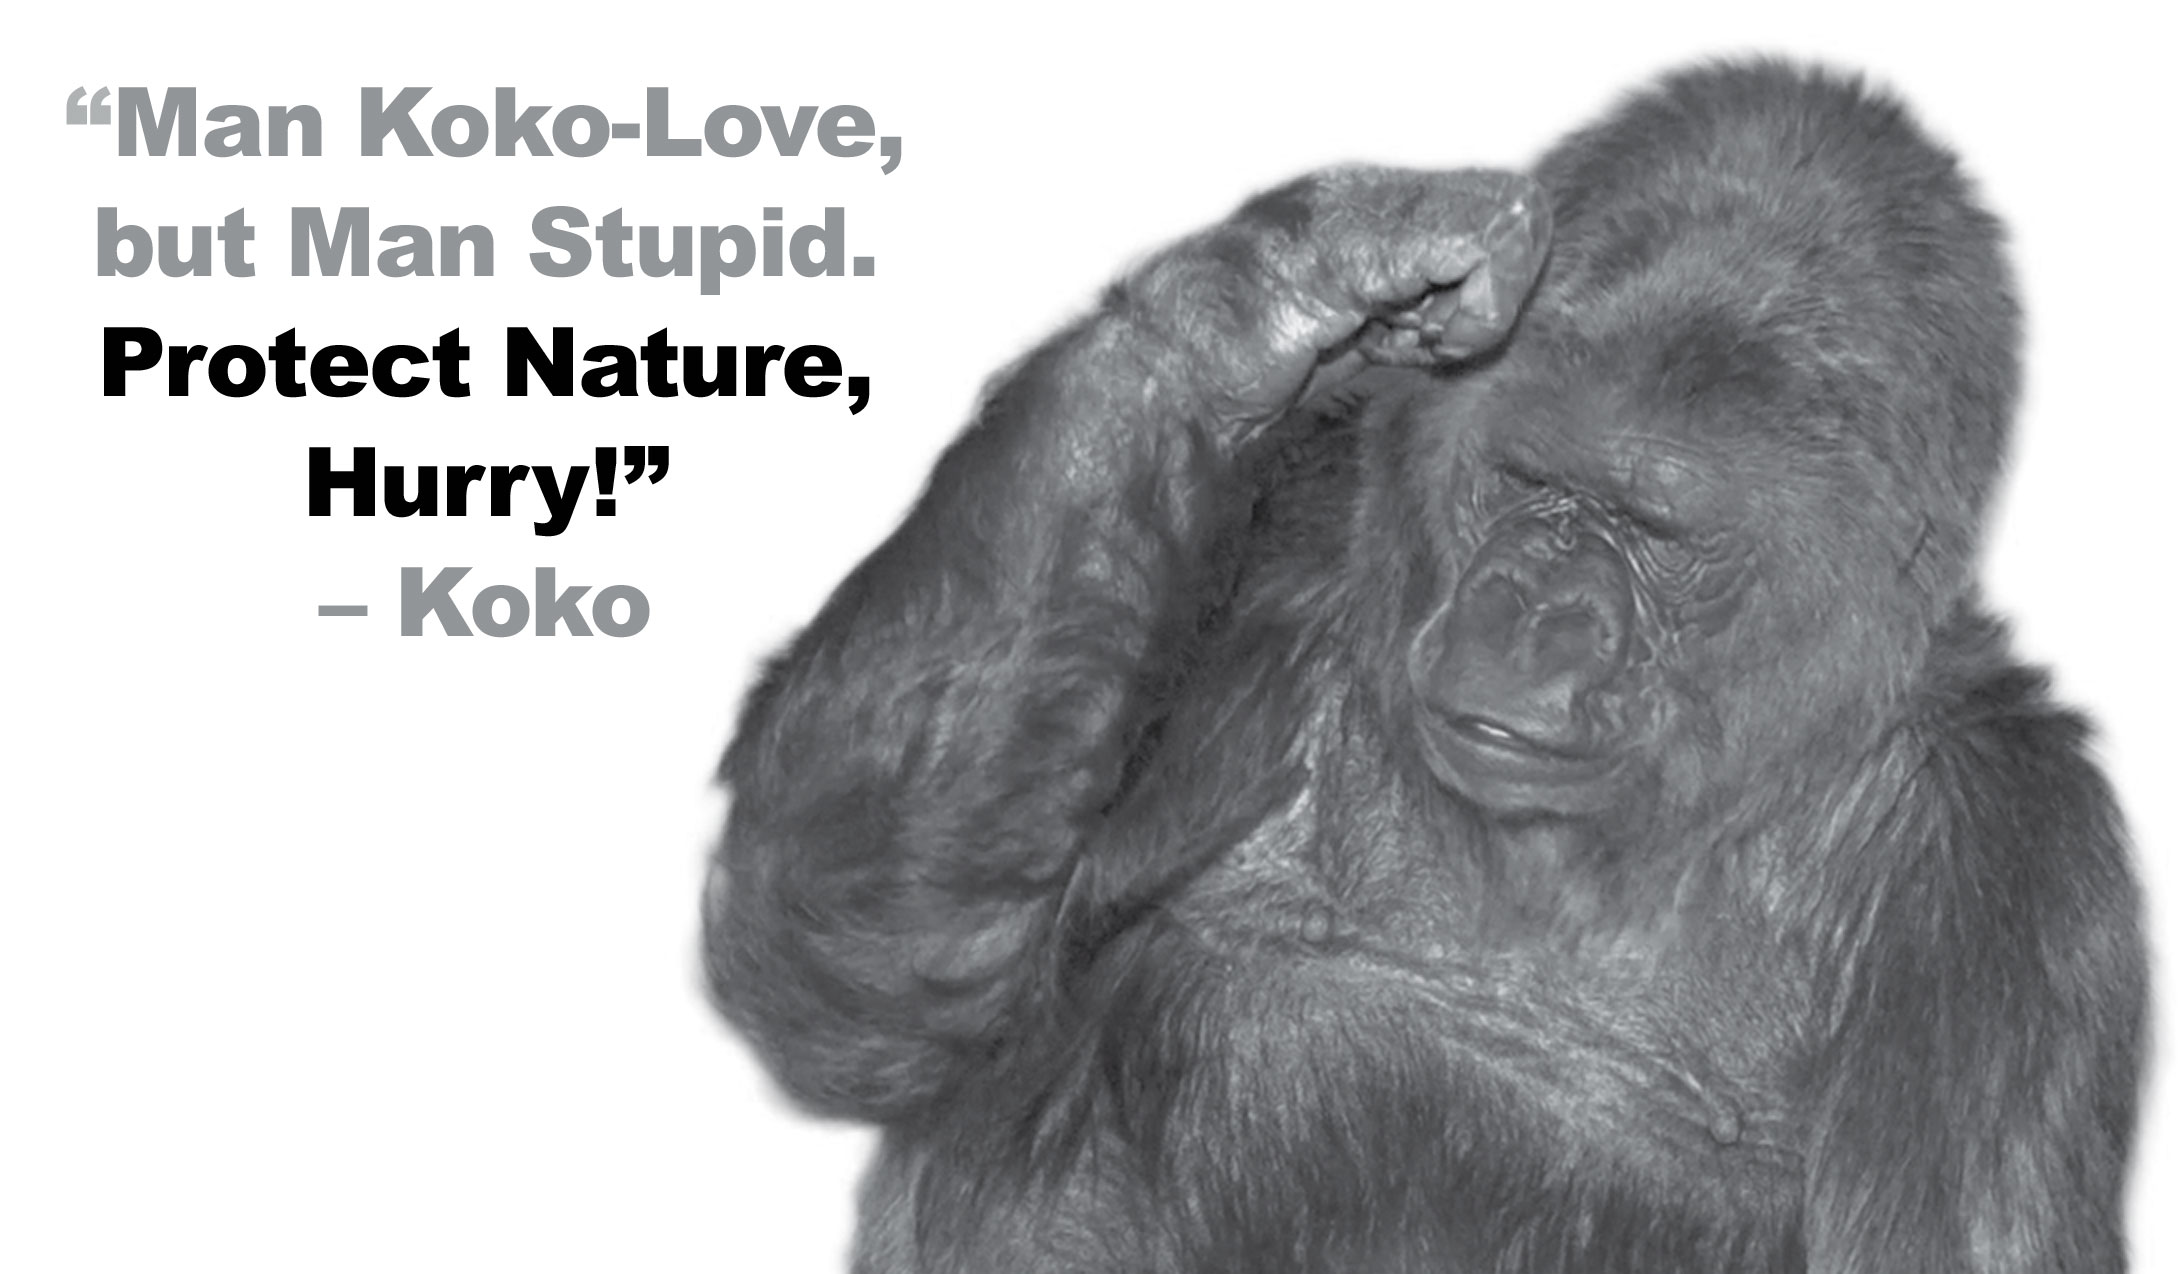 Man Koko-Love